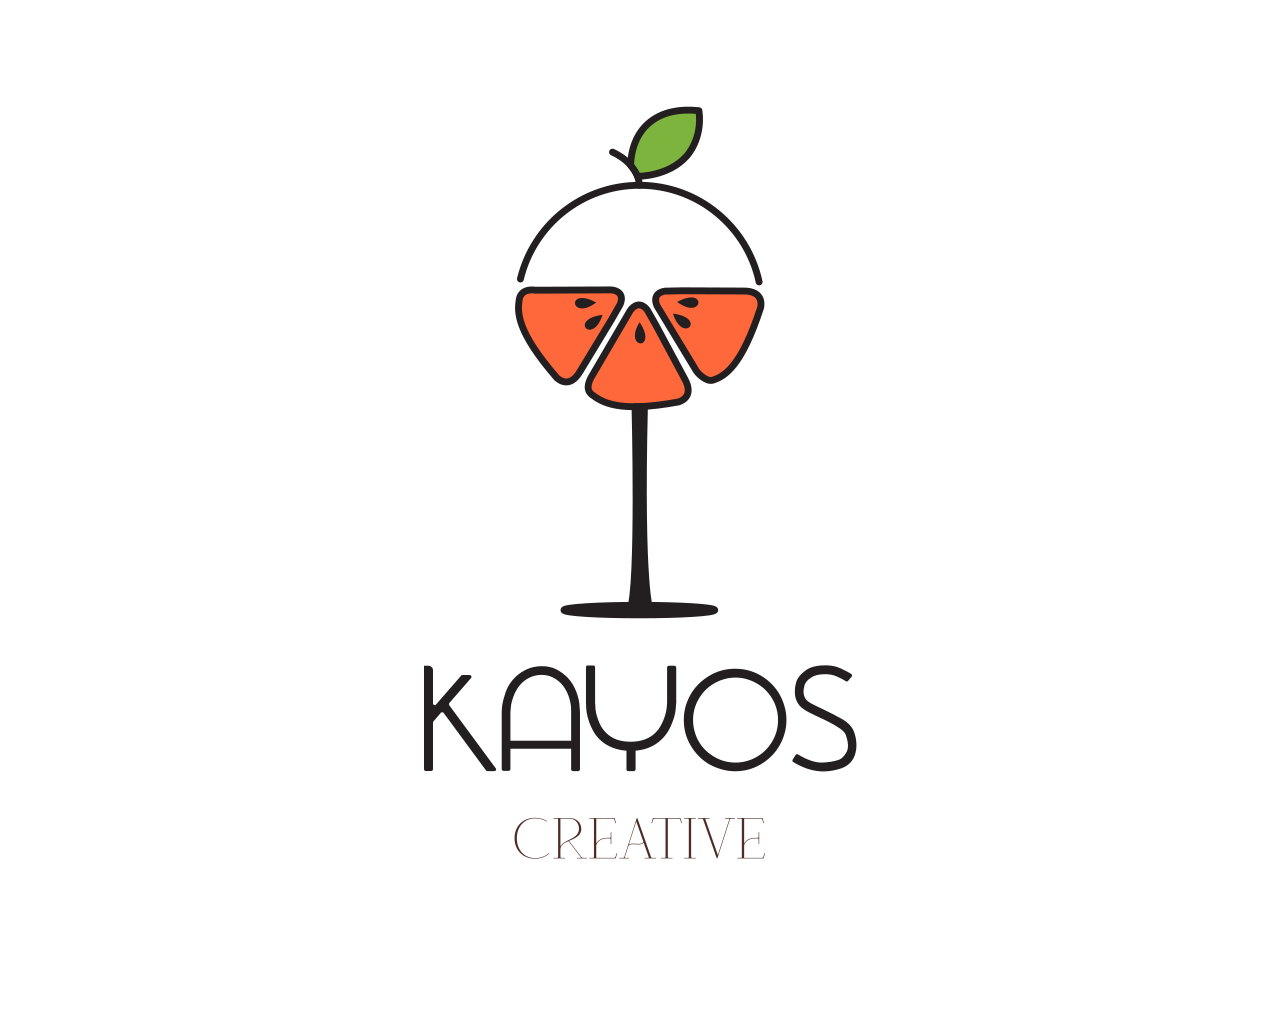 KAYOS Creative Constulting